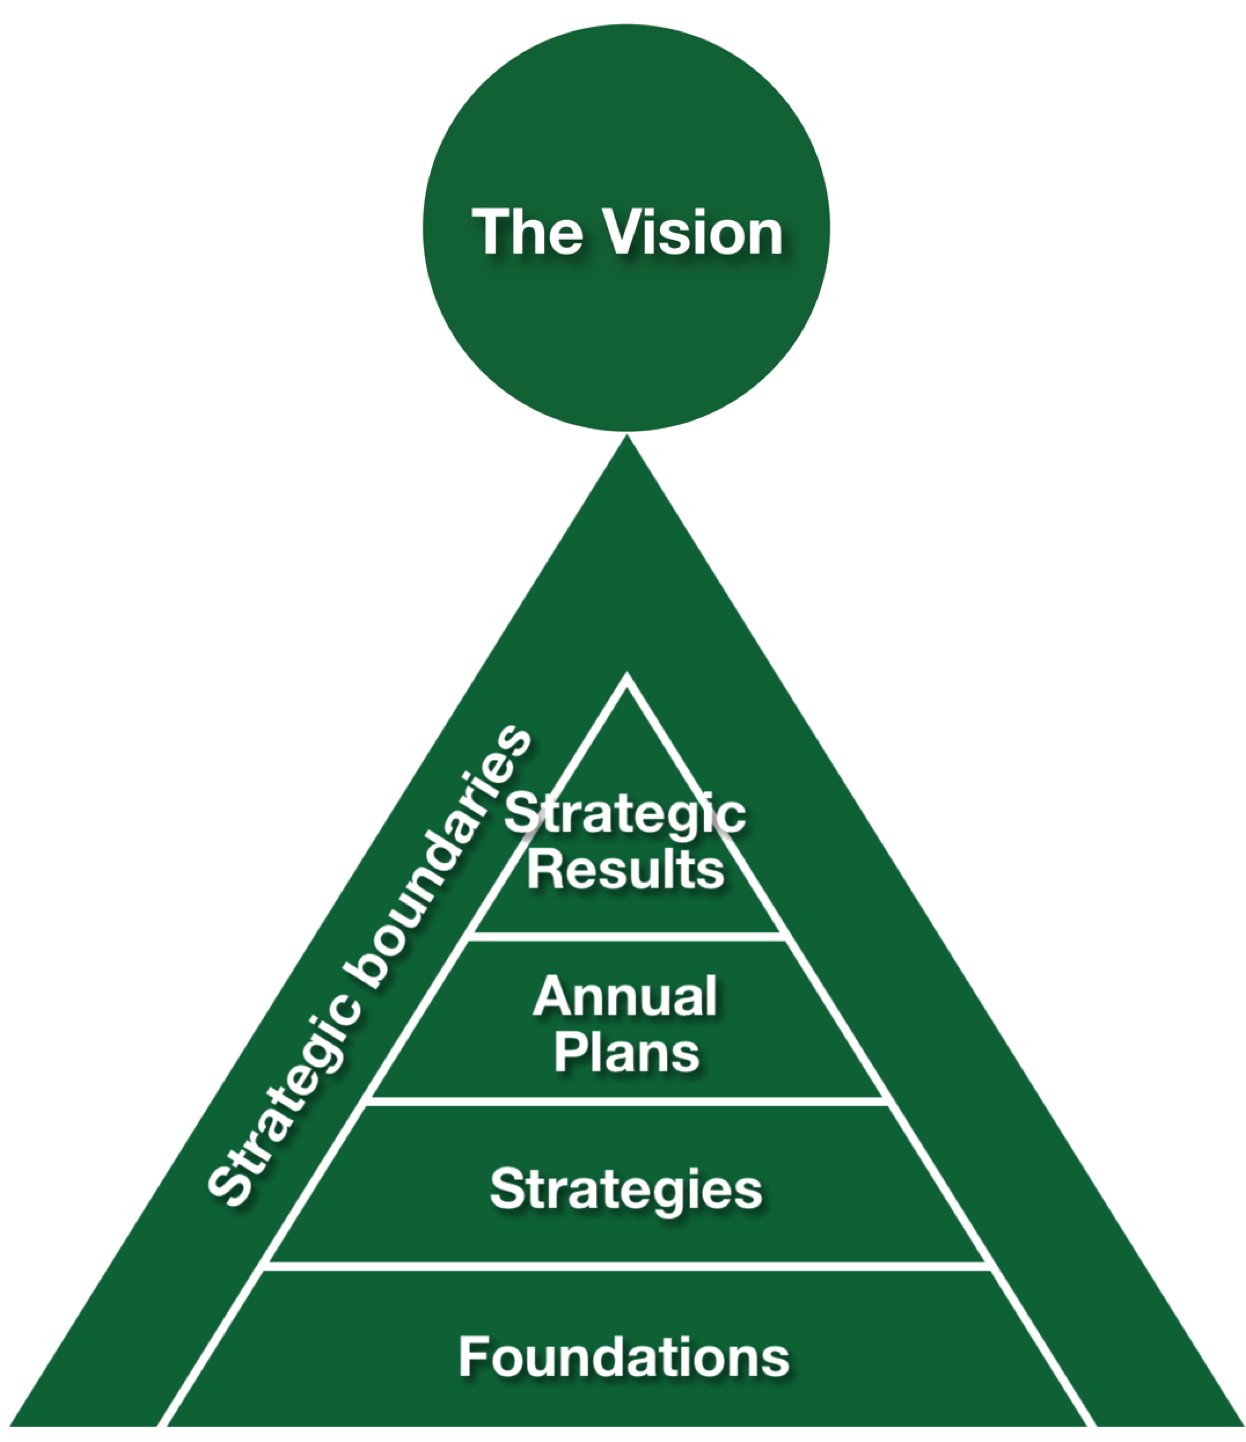 Optimal School Governance model for a strategic plan or strategic vision